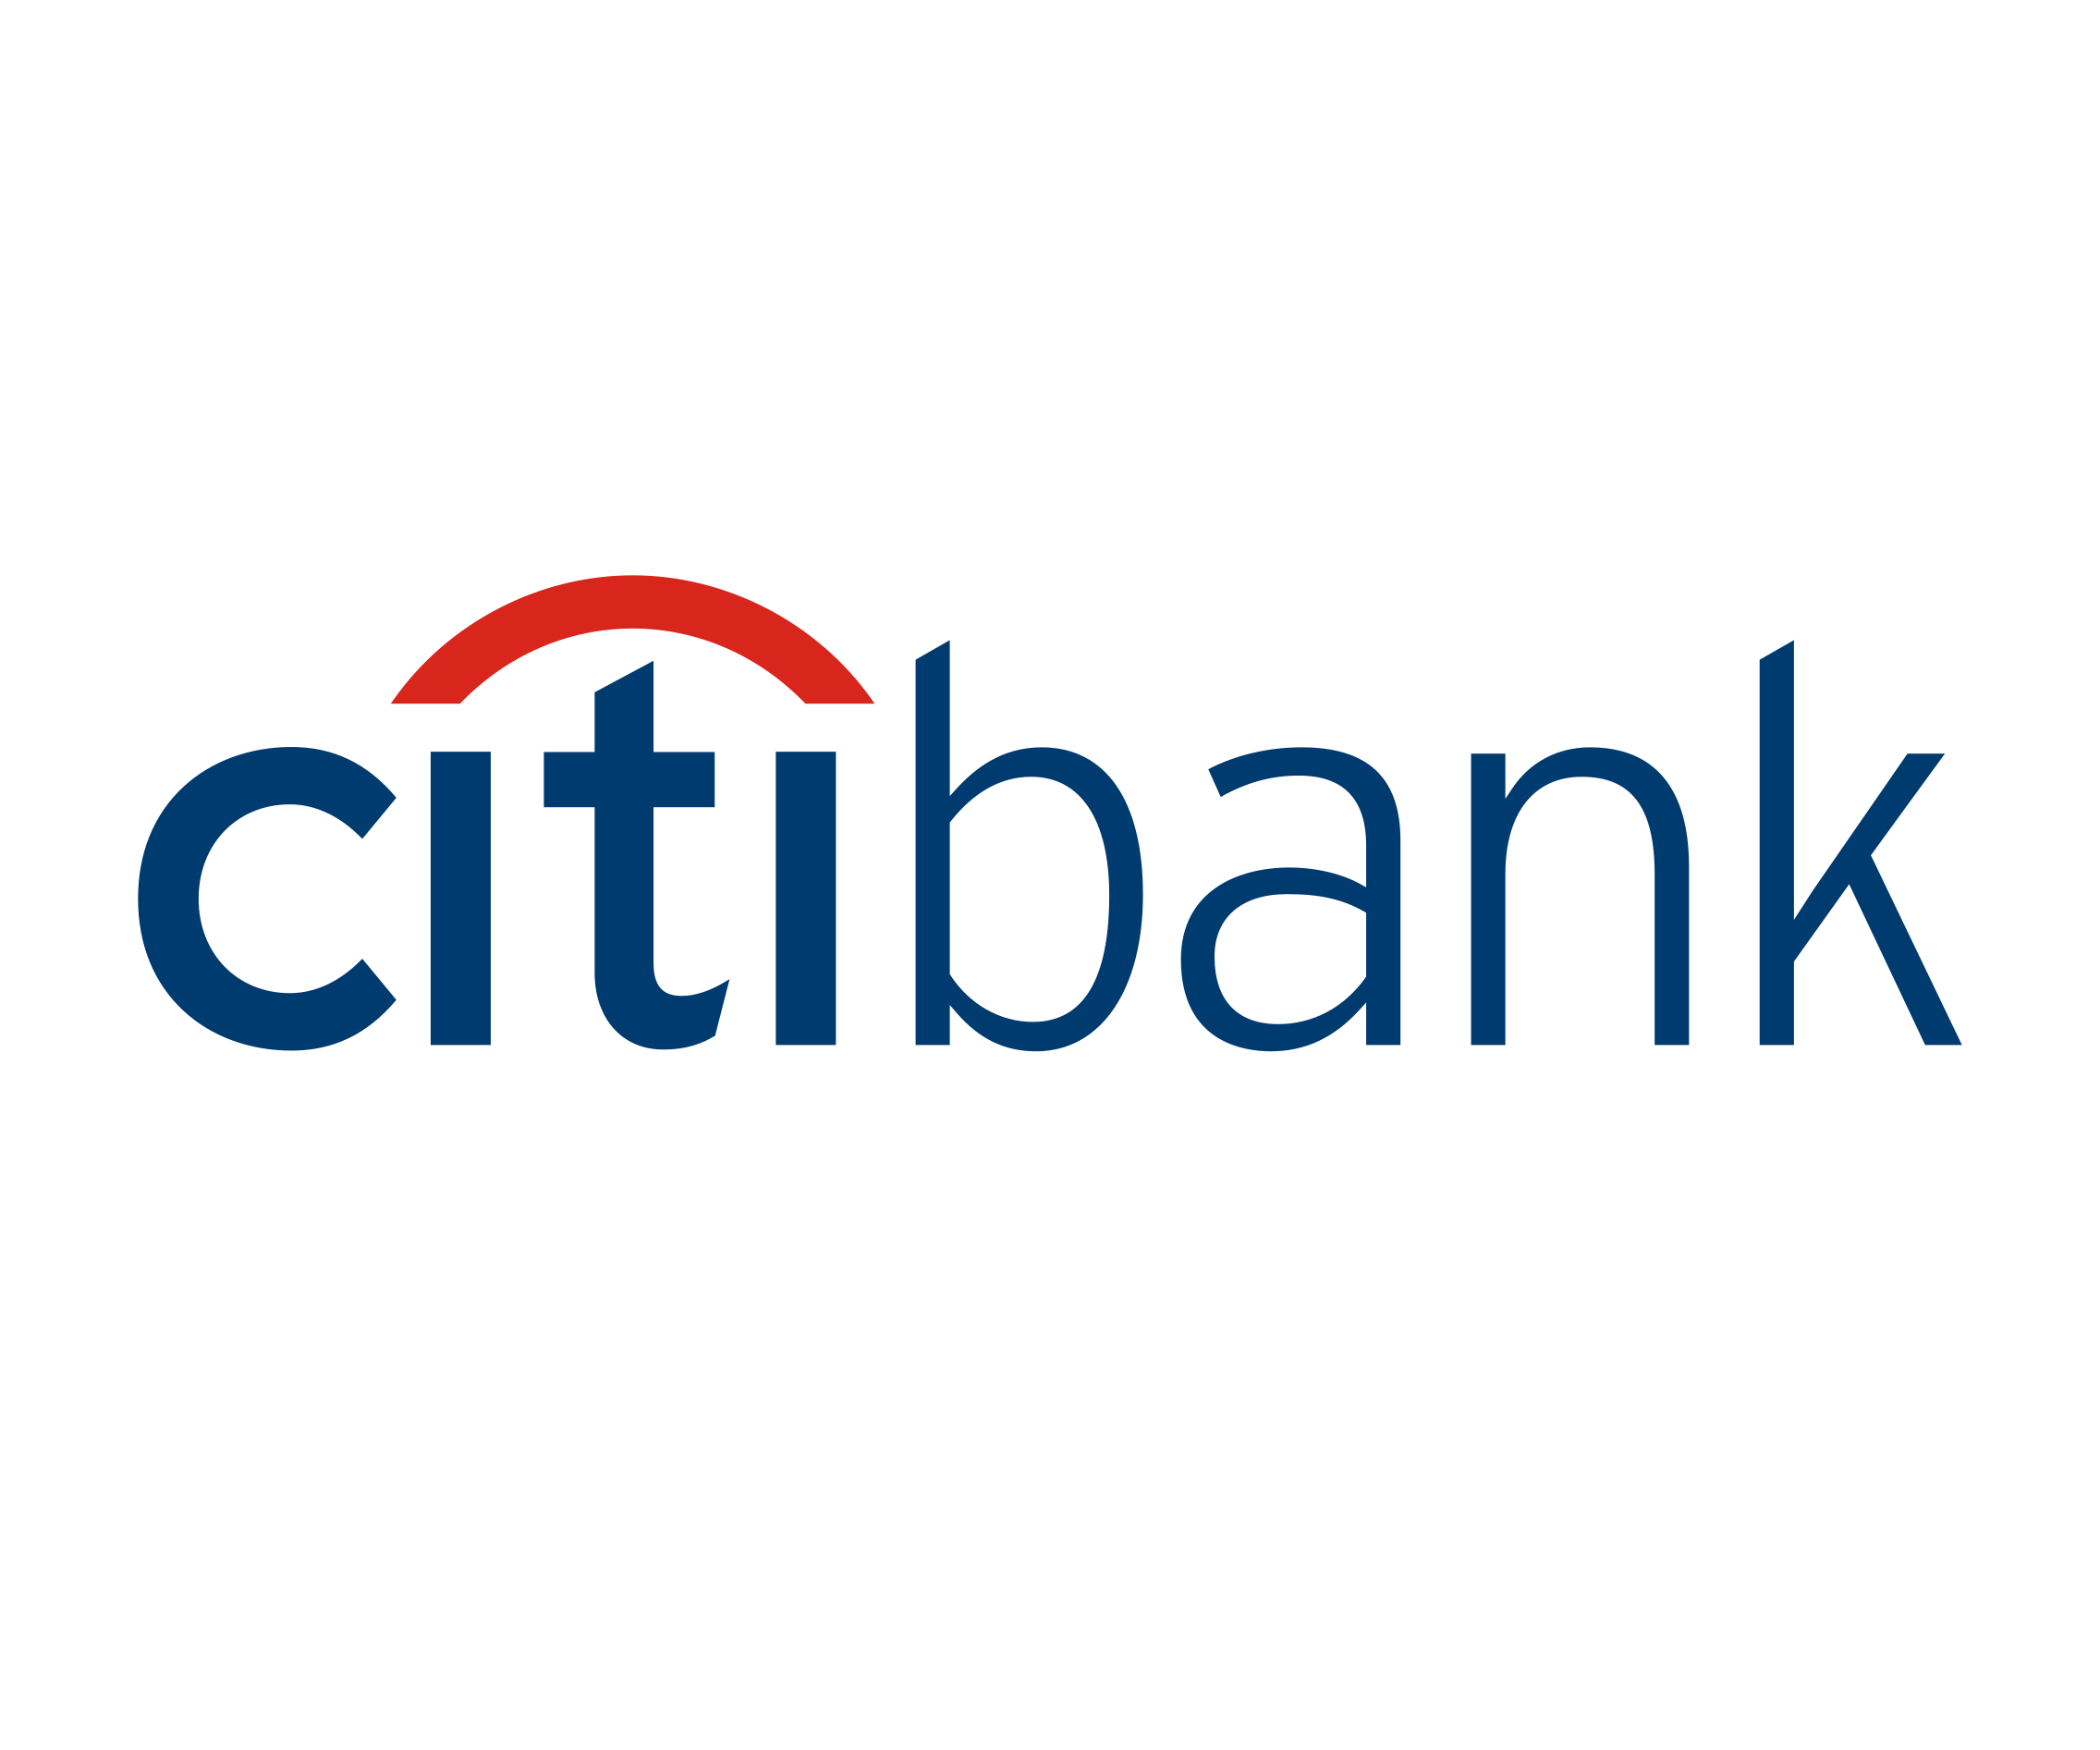 Банки логотипы png. Ситибанк. Citigroup логотип. Значок Ситибанка. Логотипы банков.